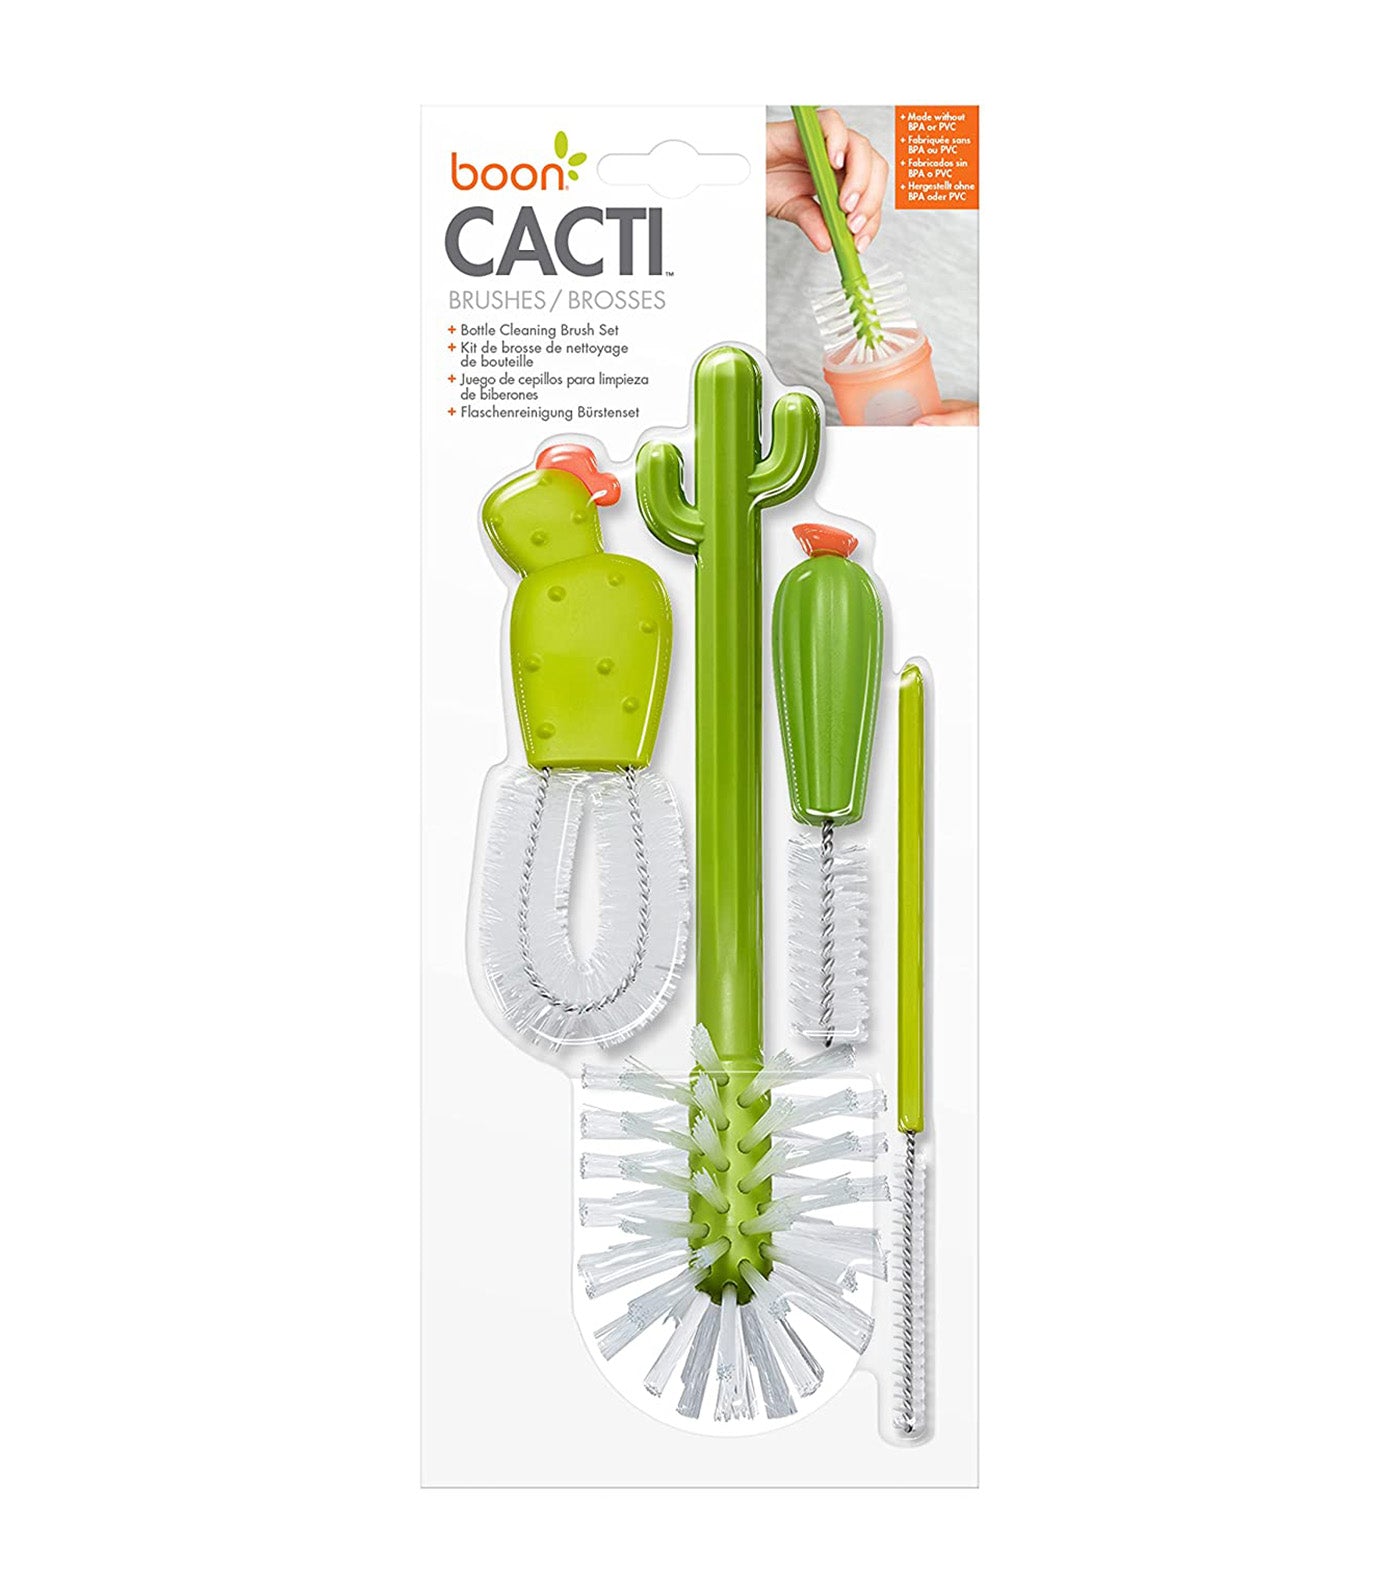 CACTI Bottle Cleaning Brush Set - Replacement Brush